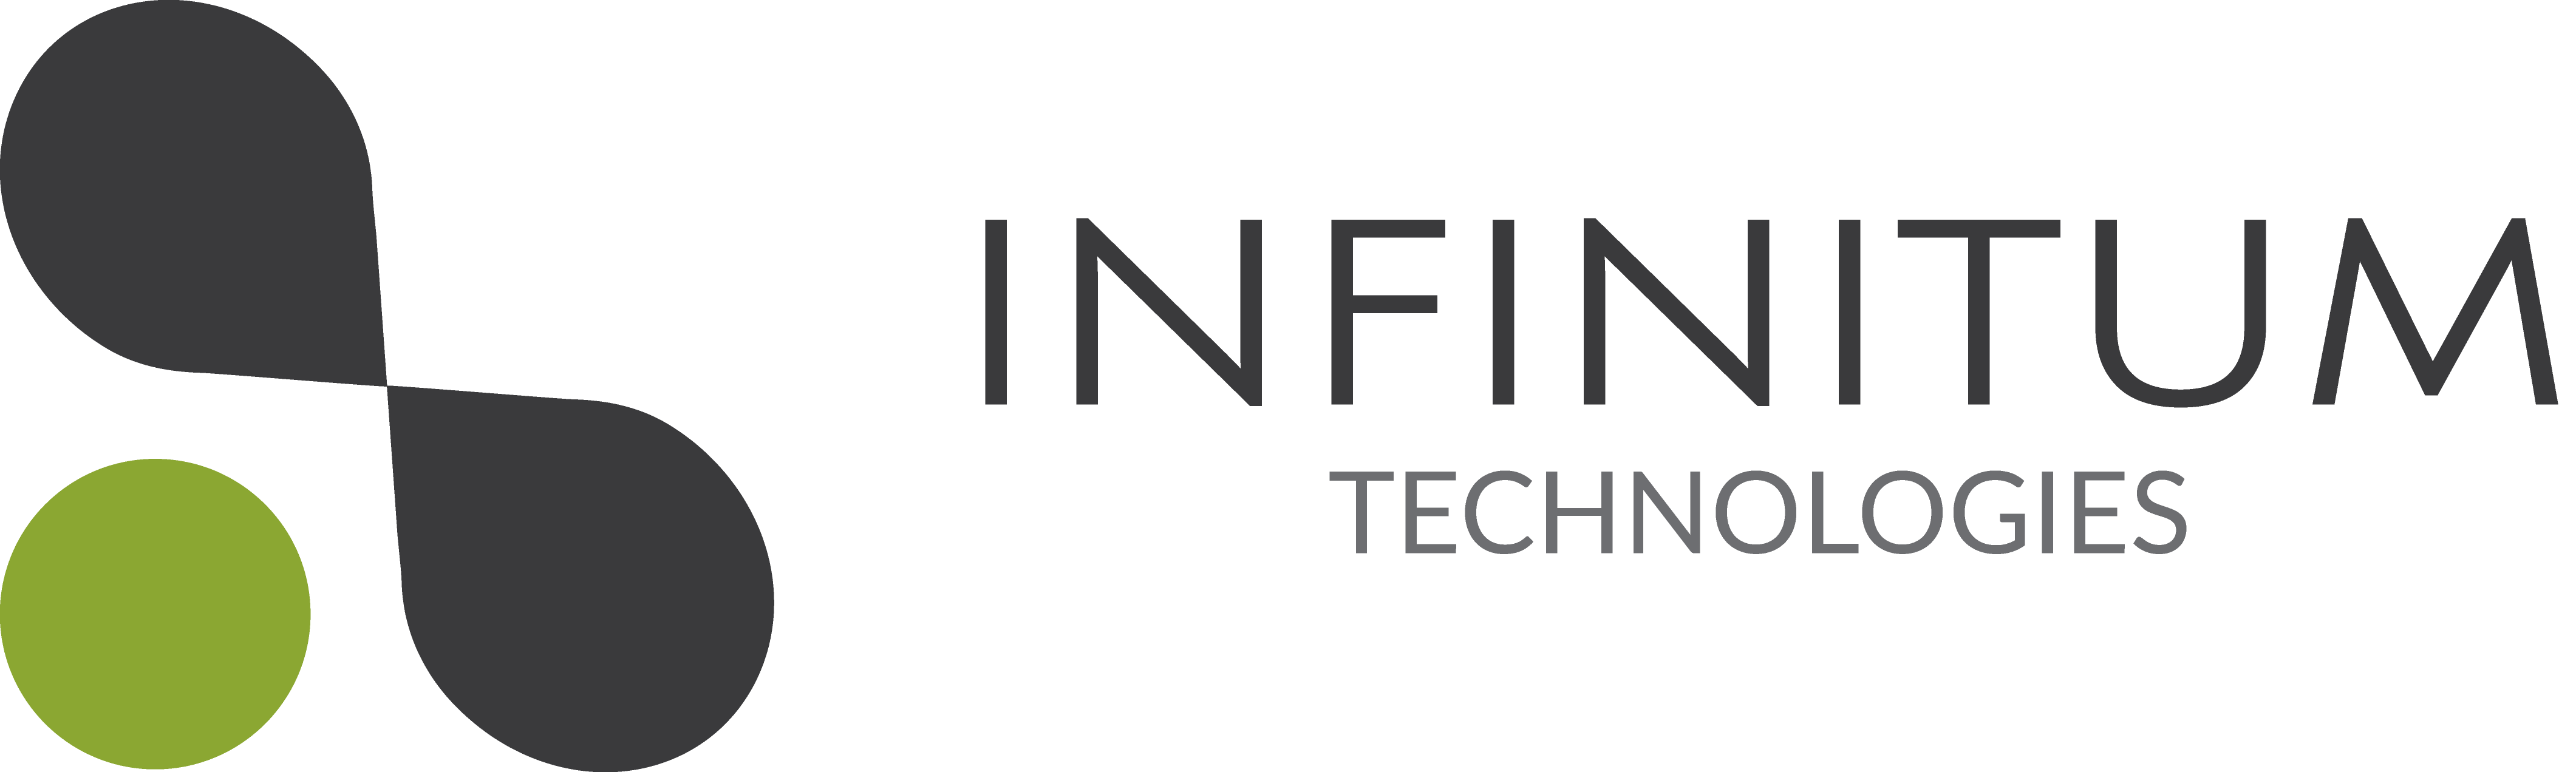 Infinitum Technologies logo